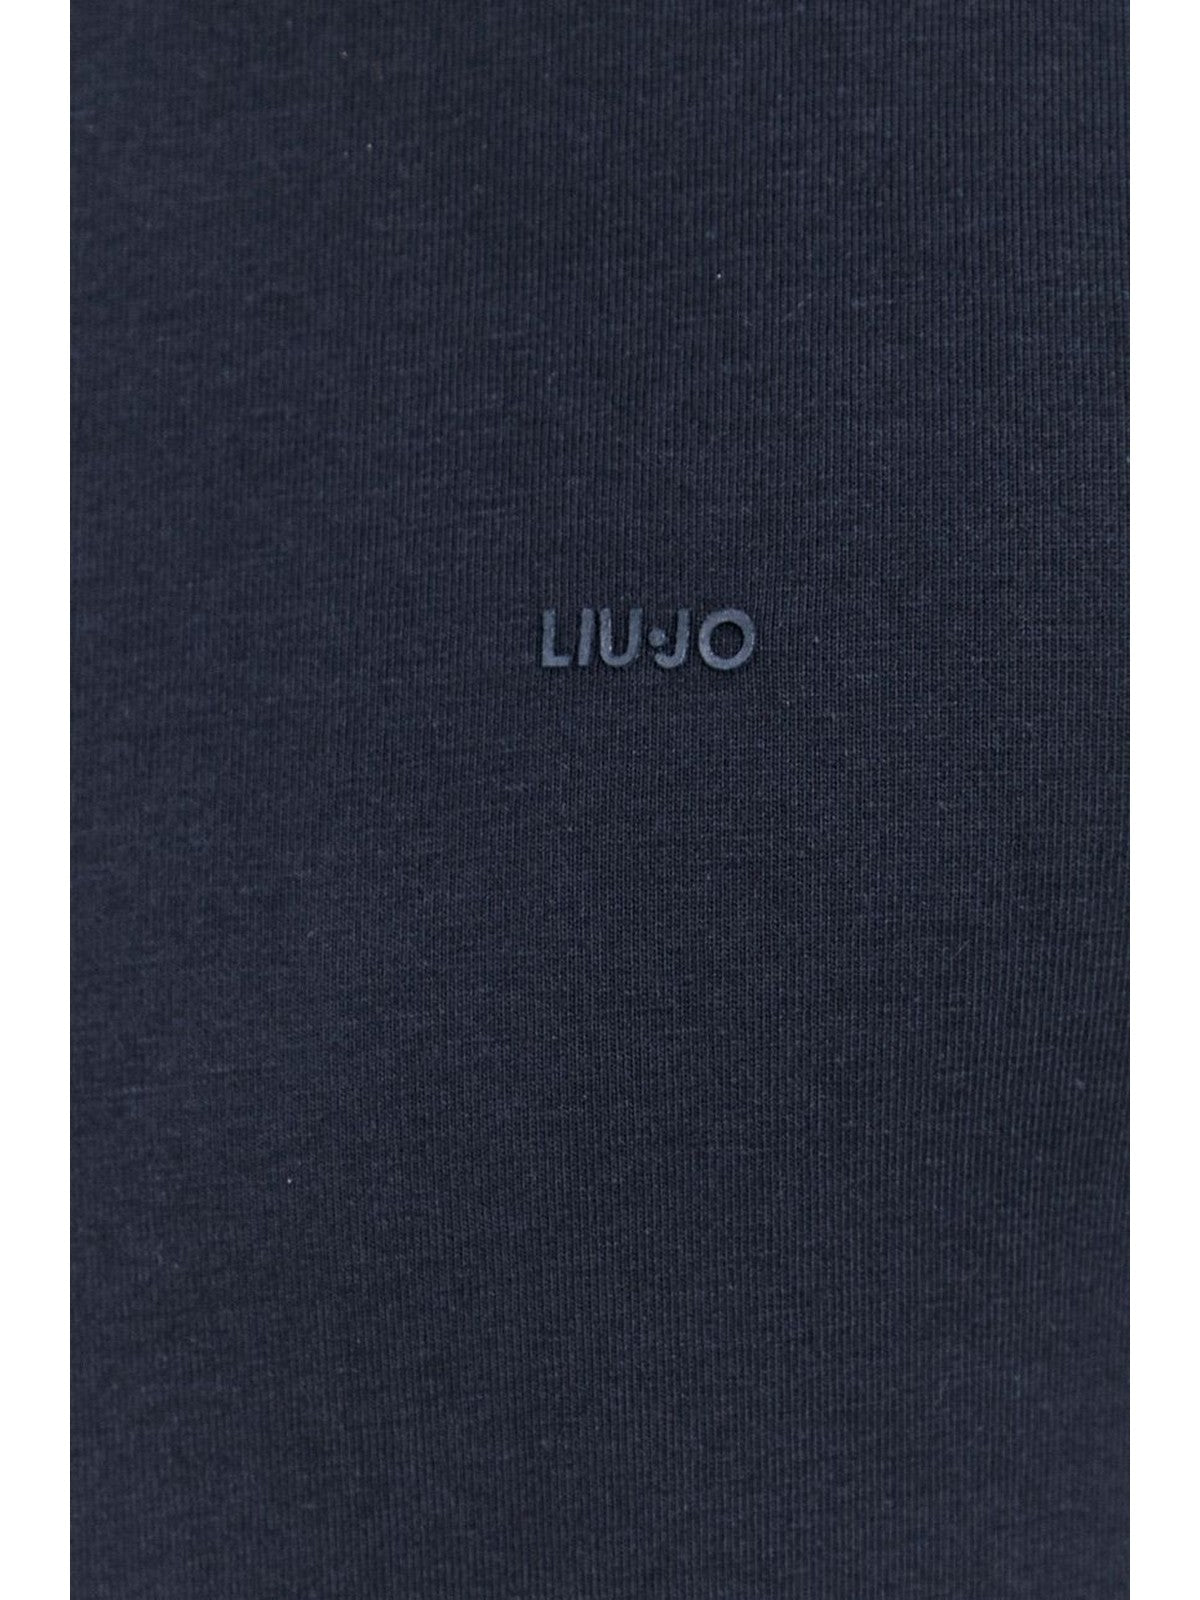 LIU JO HOMME T-Shirt et Polo M000P204LONGLOGO 10 Bleu